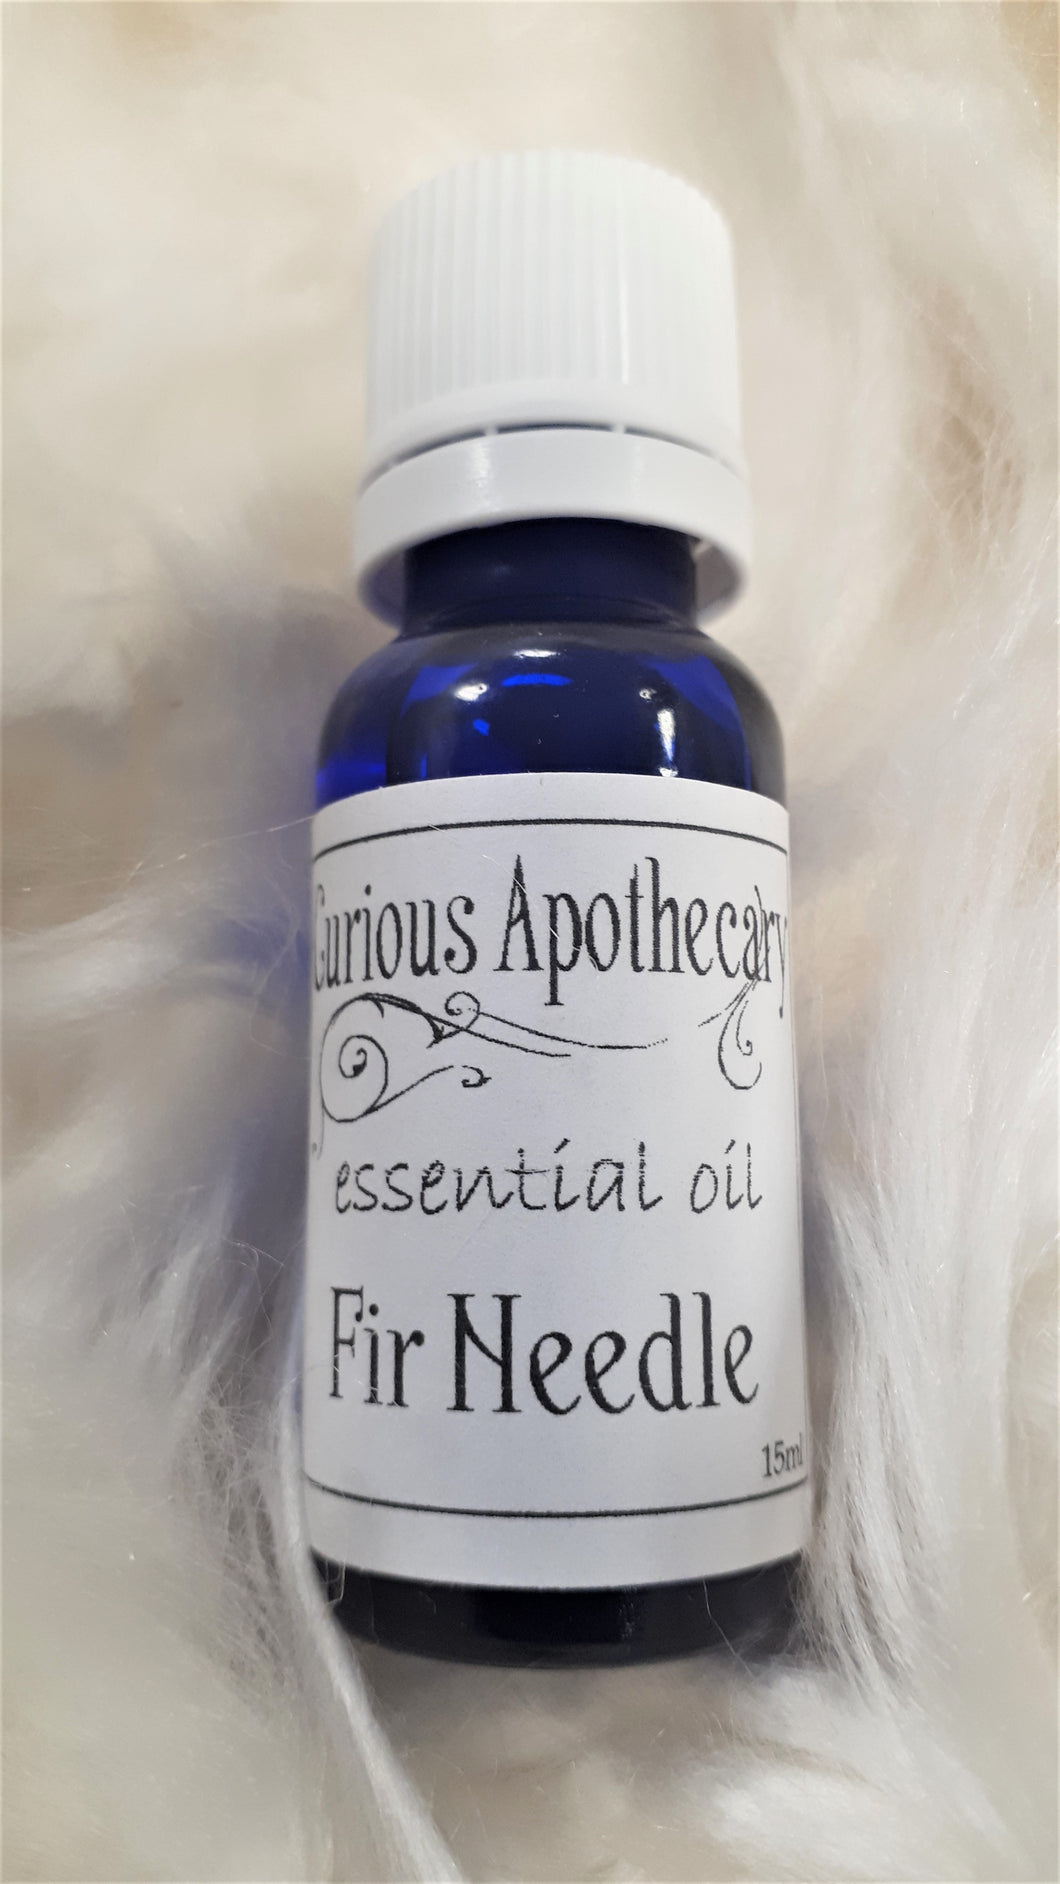 Fir Needle Essential Oil 15ml